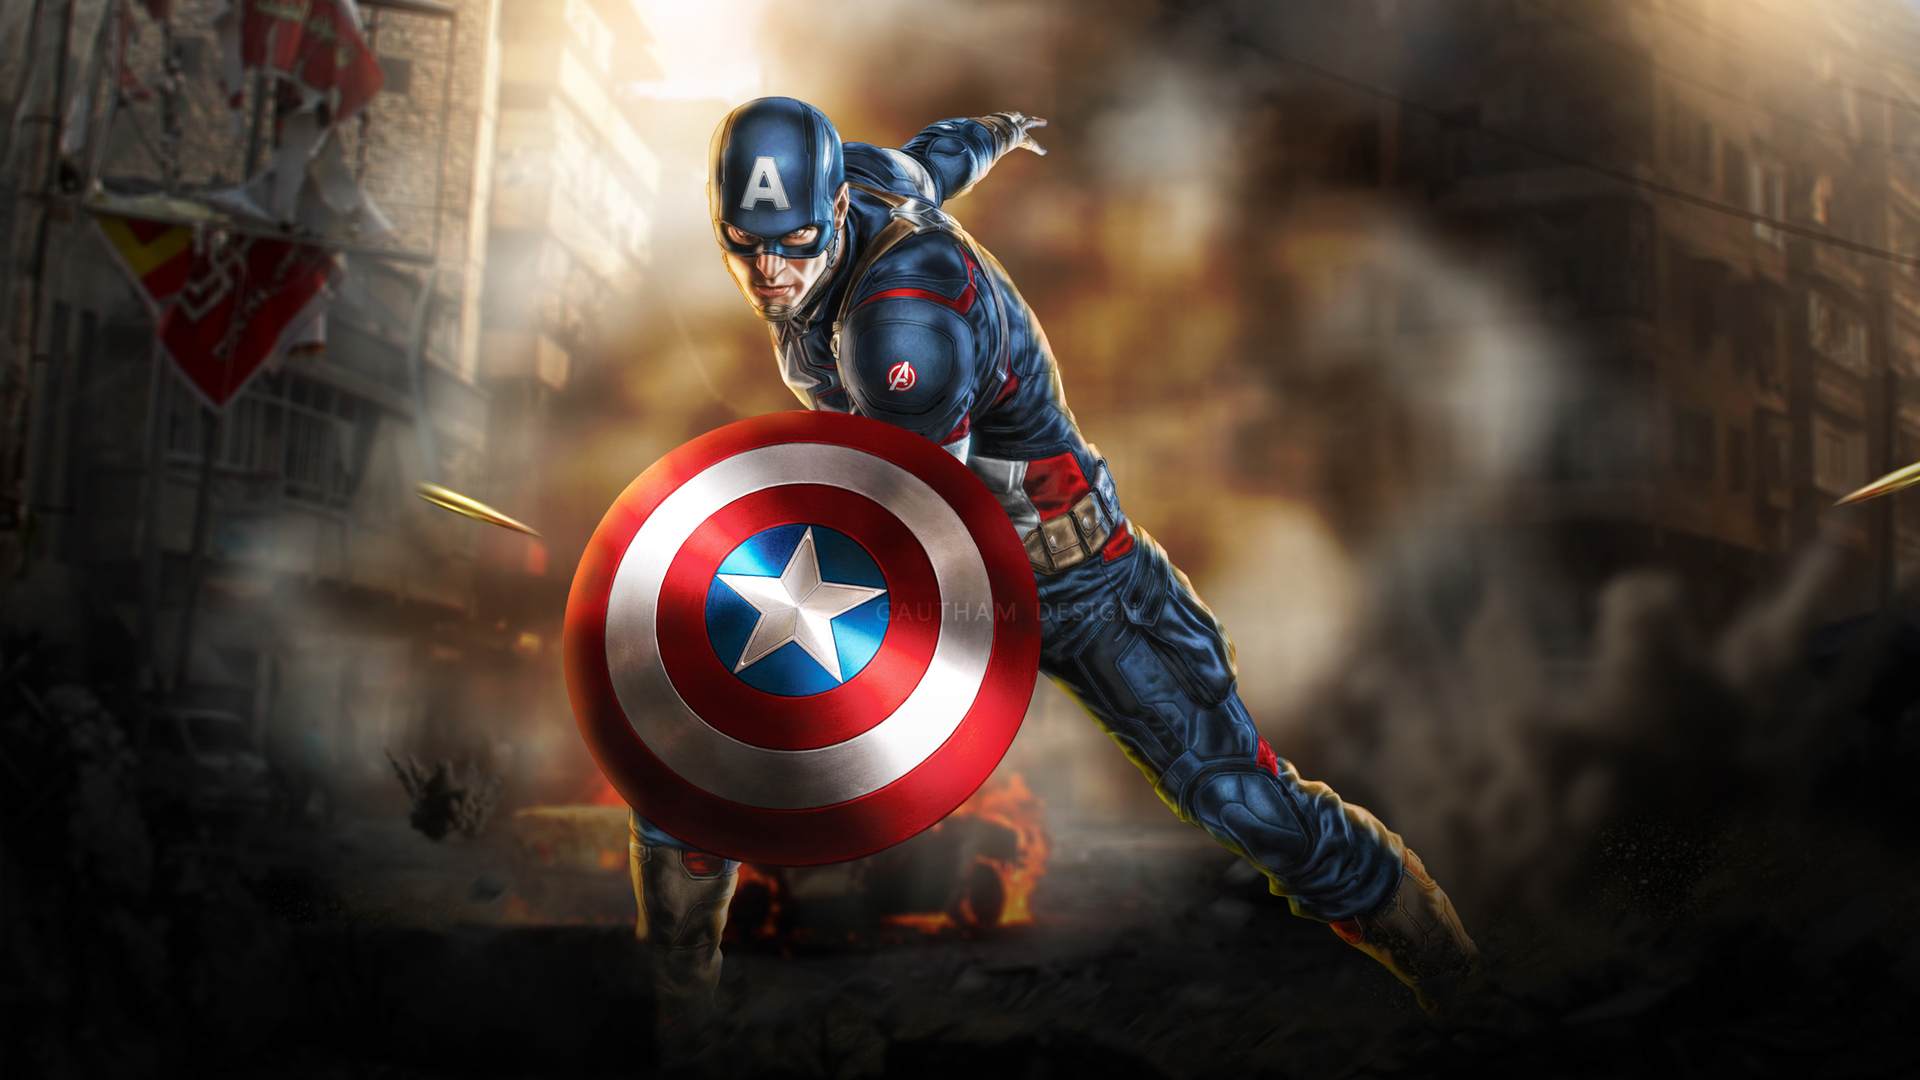 Free Captain America Wallpaper Downloads 400 Captain America Wallpapers  for FREE  Wallpaperscom